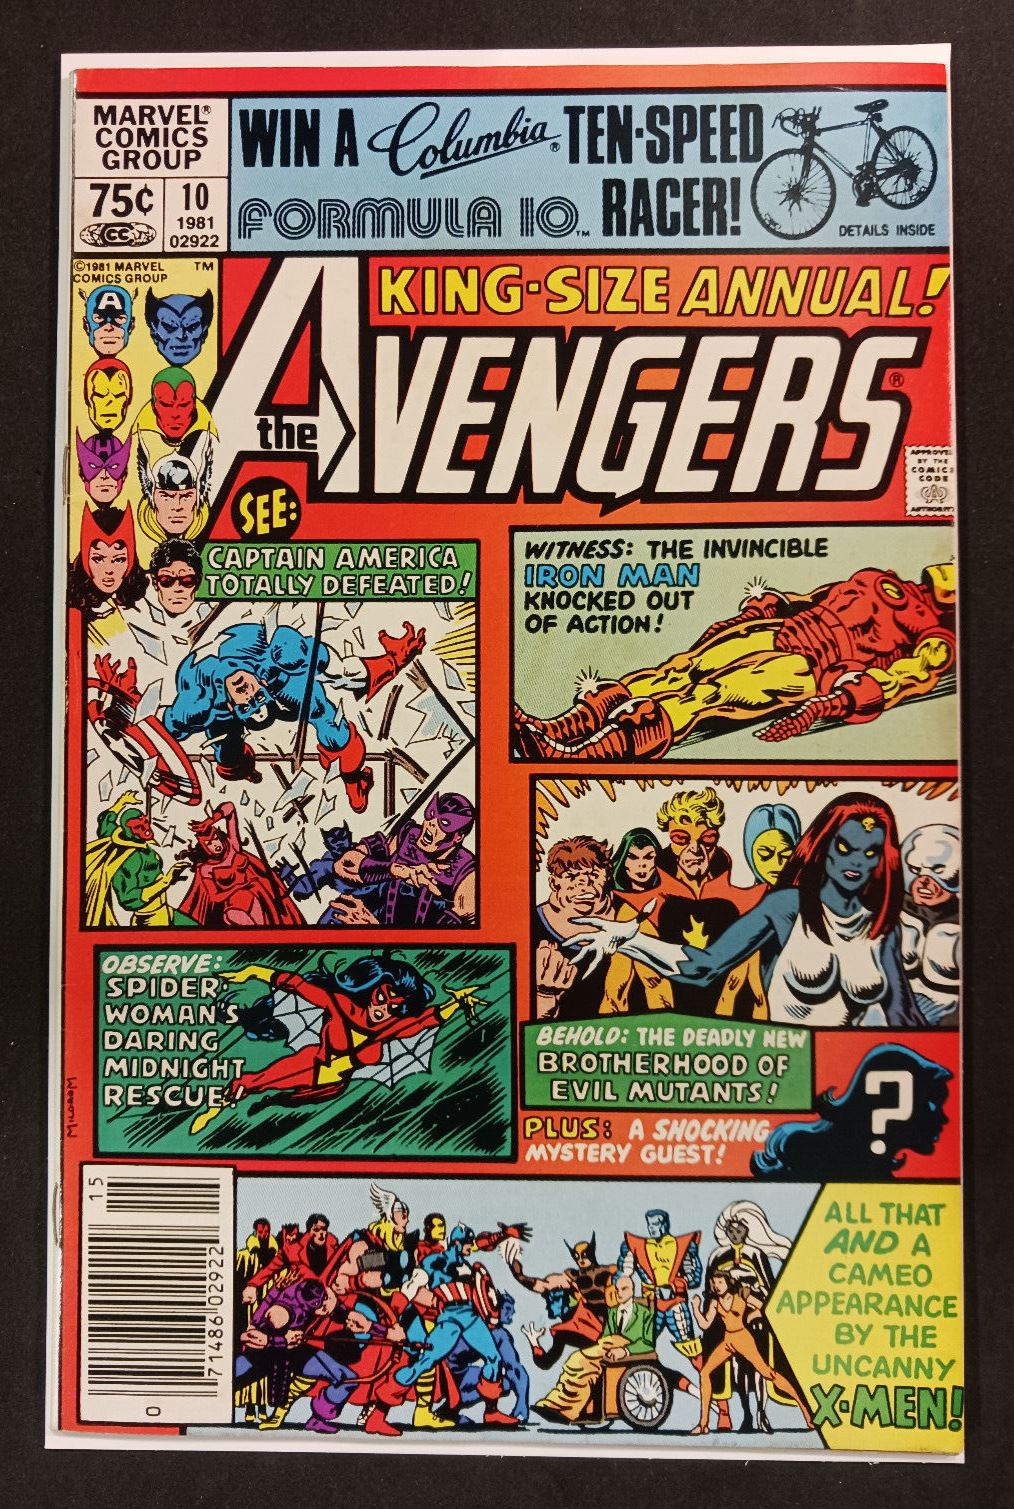 1981 The Avengers #10